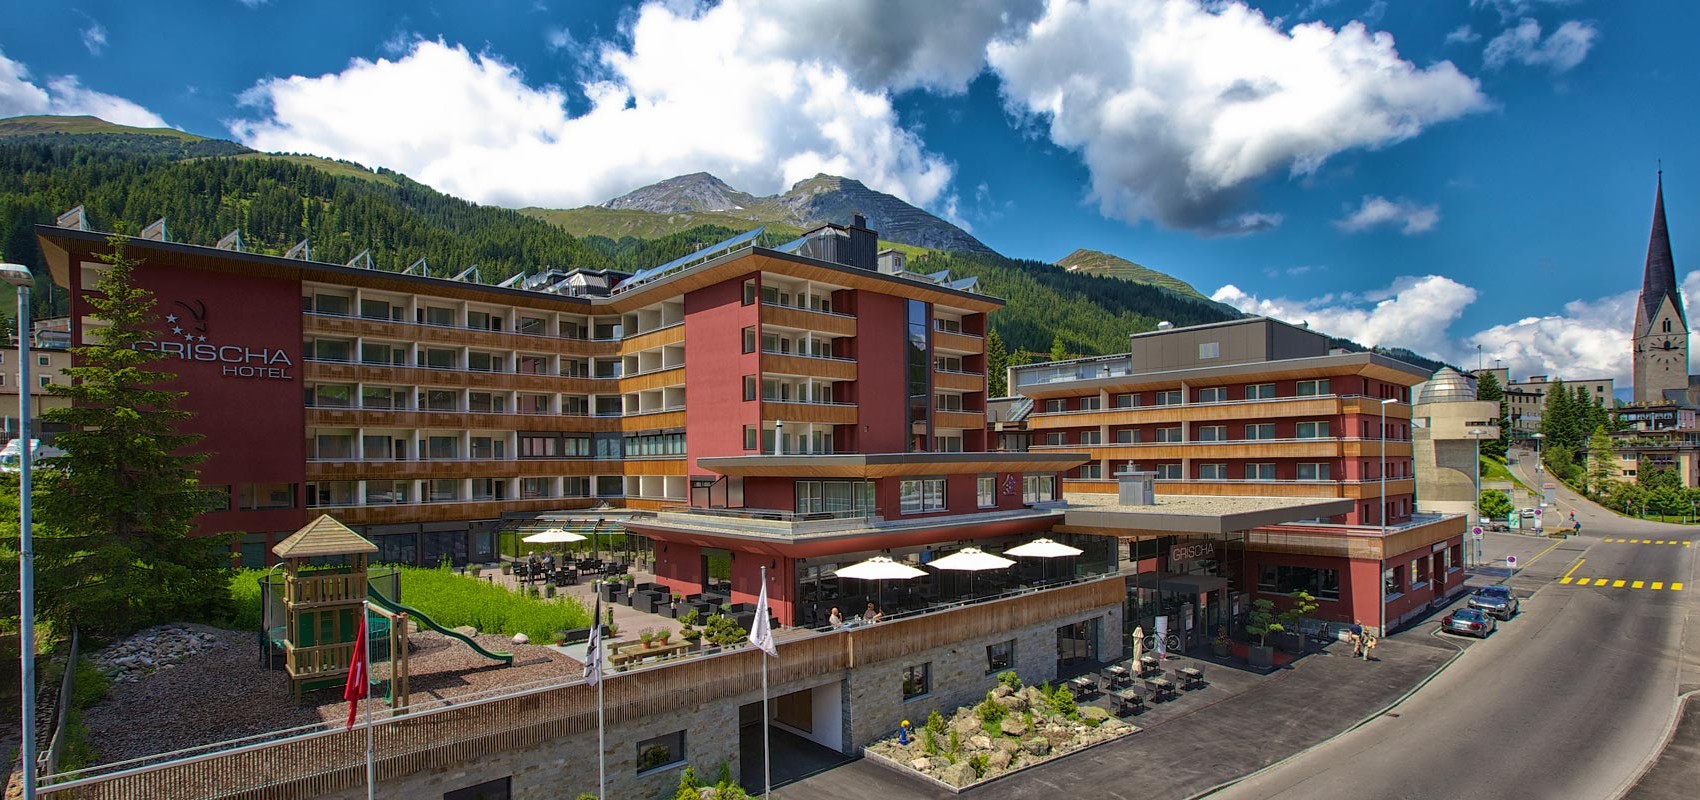 Hotel Grischa, exterior view panorama